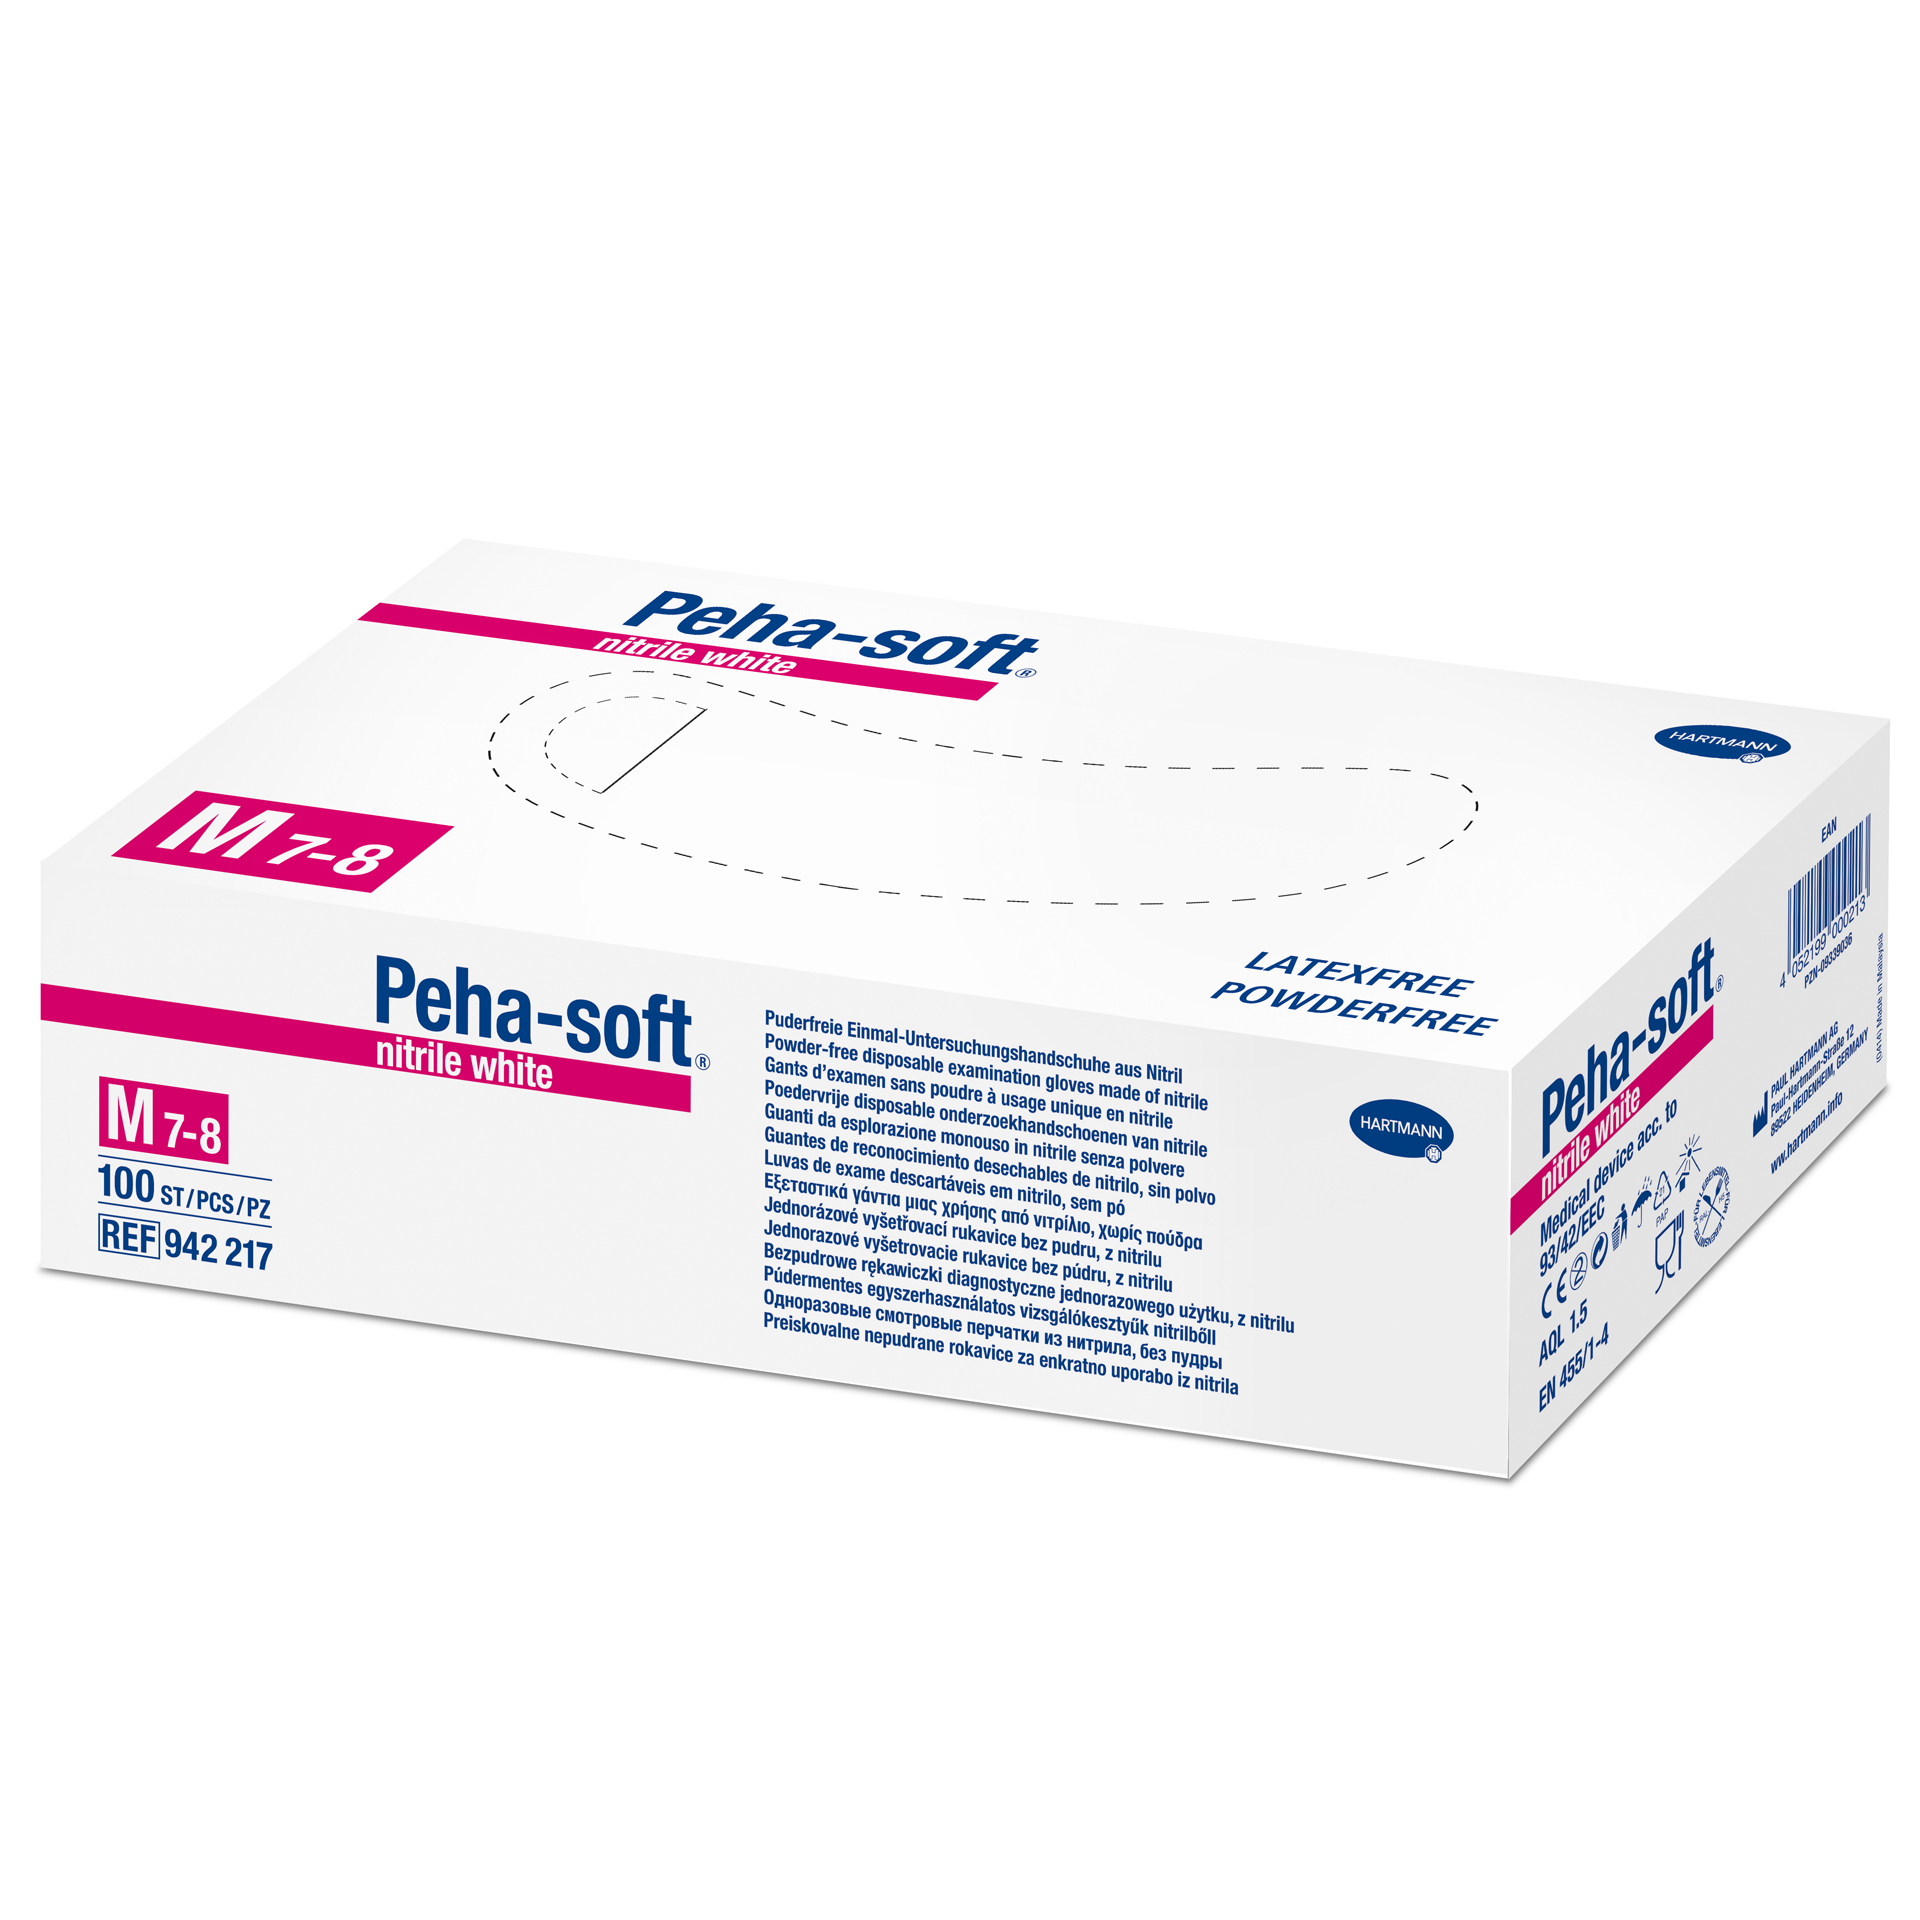 Peha-soft® nitrile white, 100 Stück